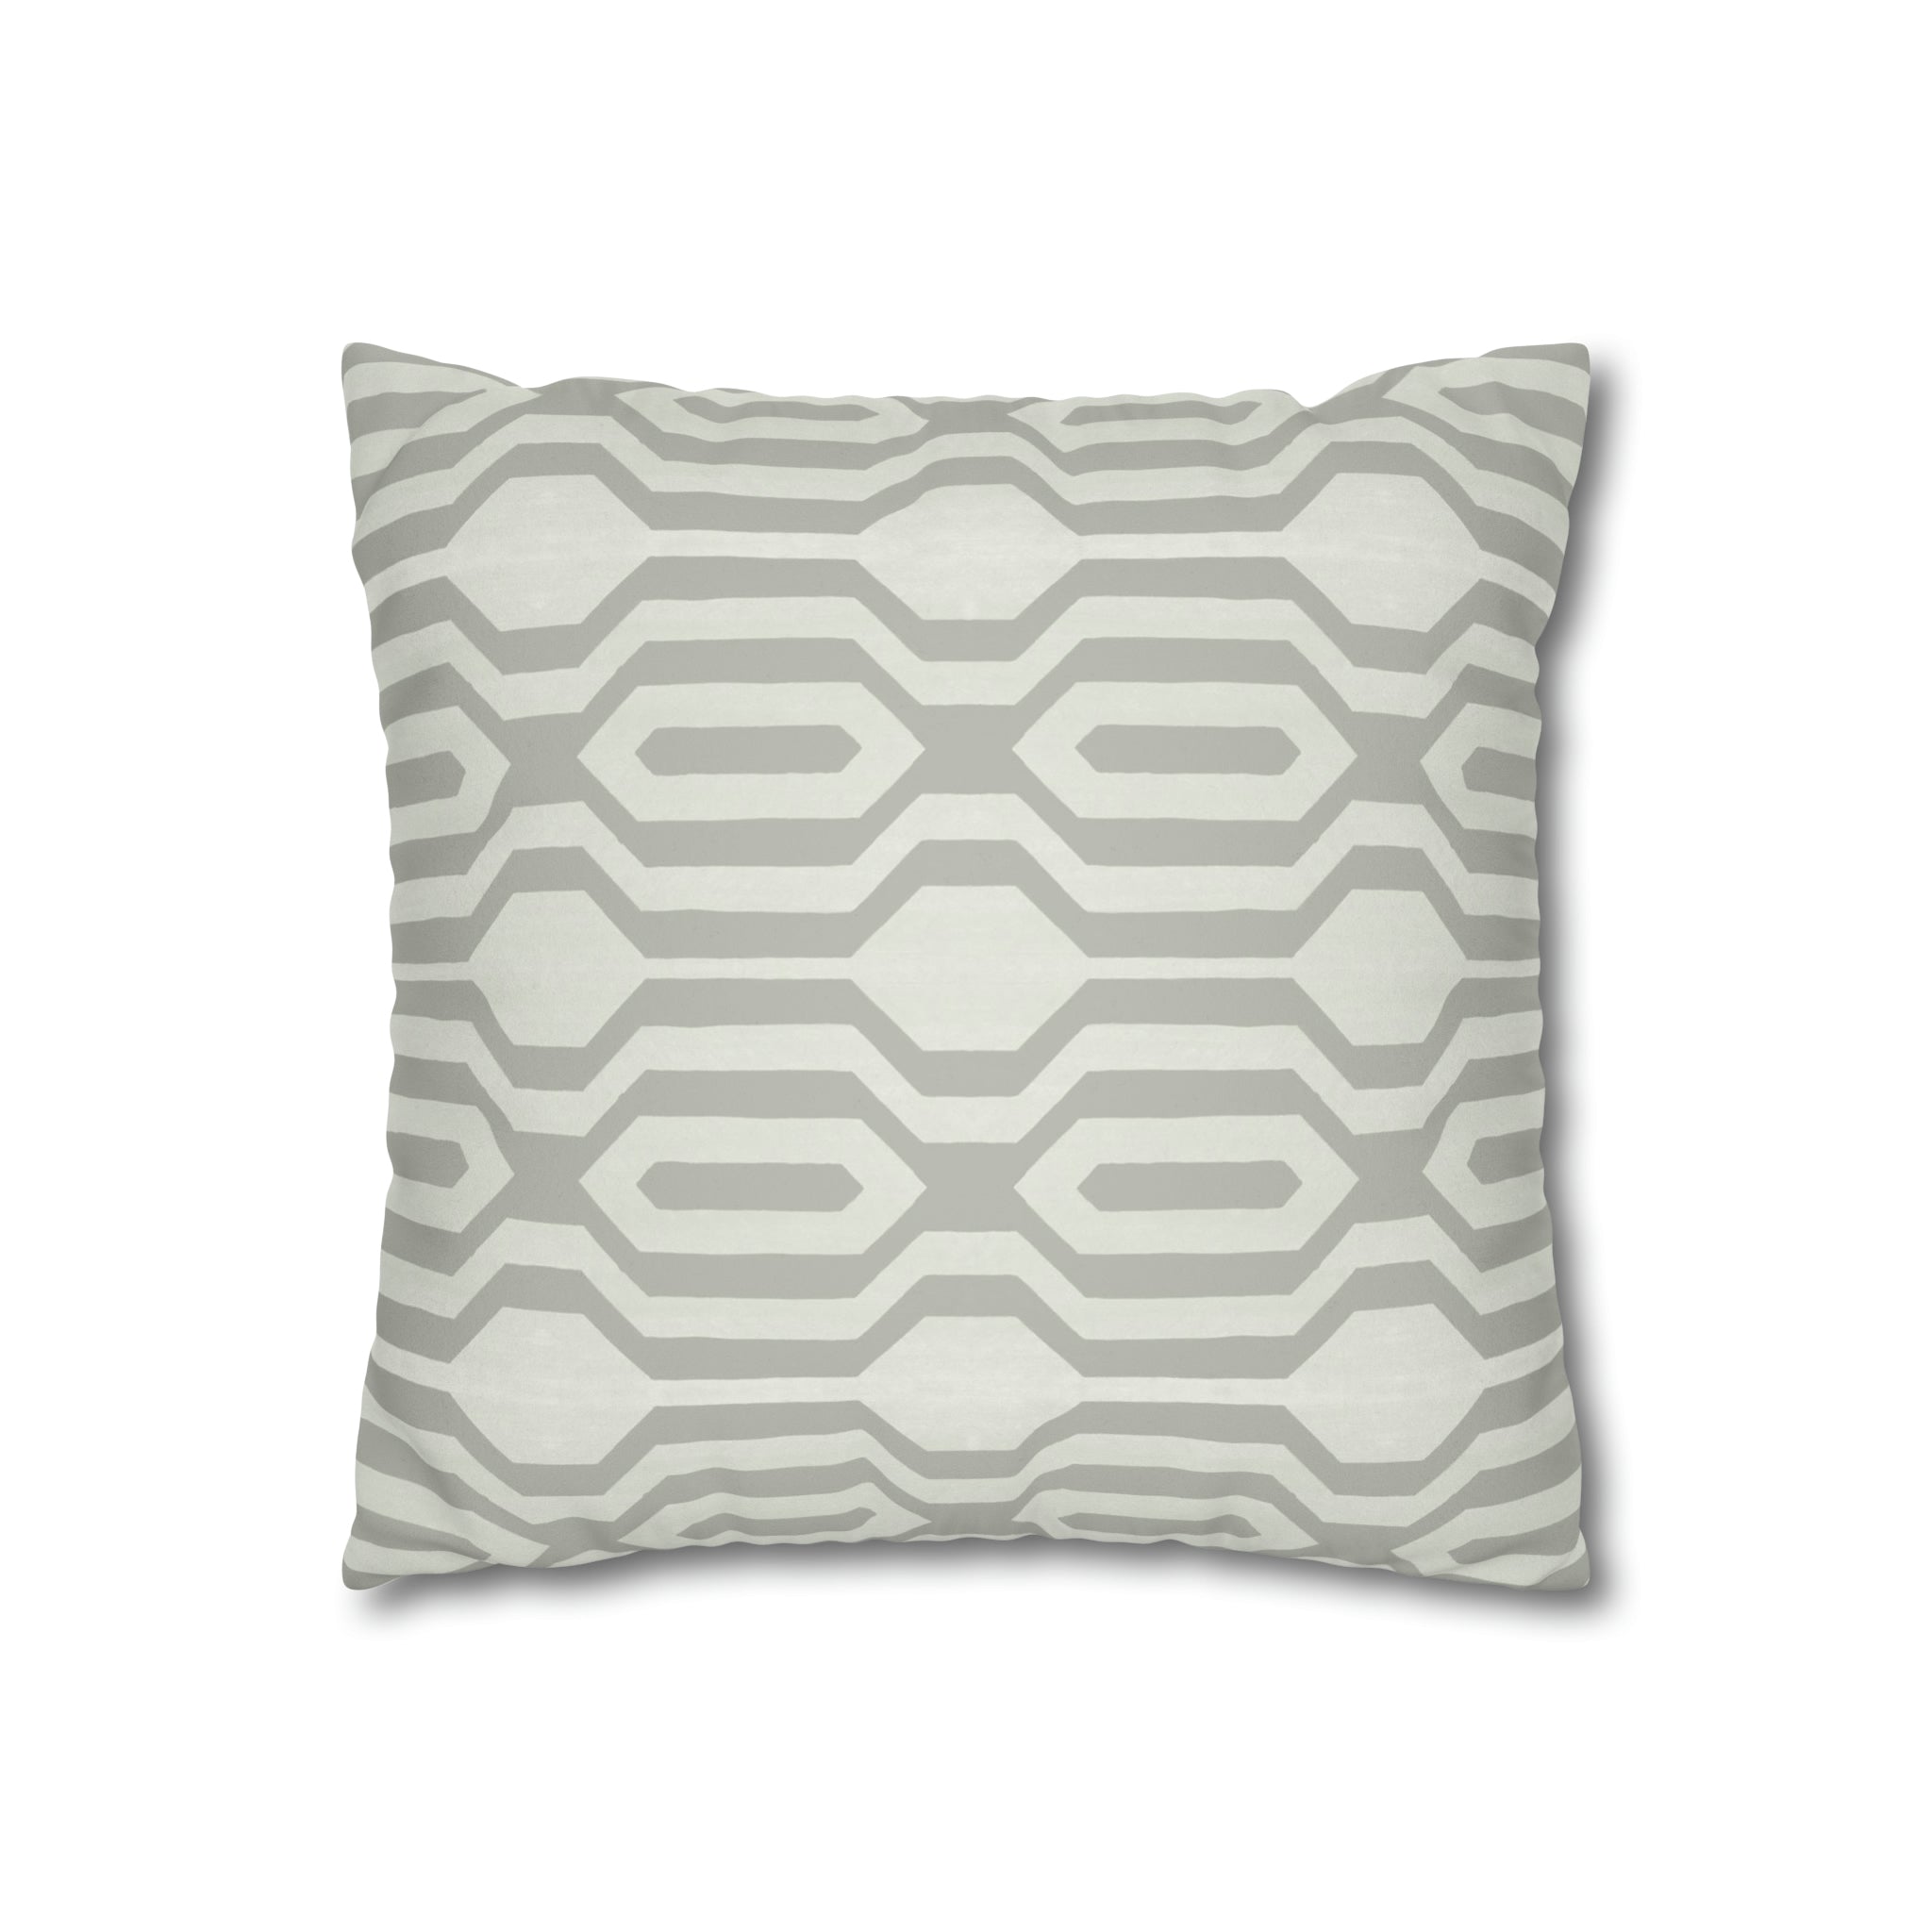 Lariat Microsuede Square Pillow Cover